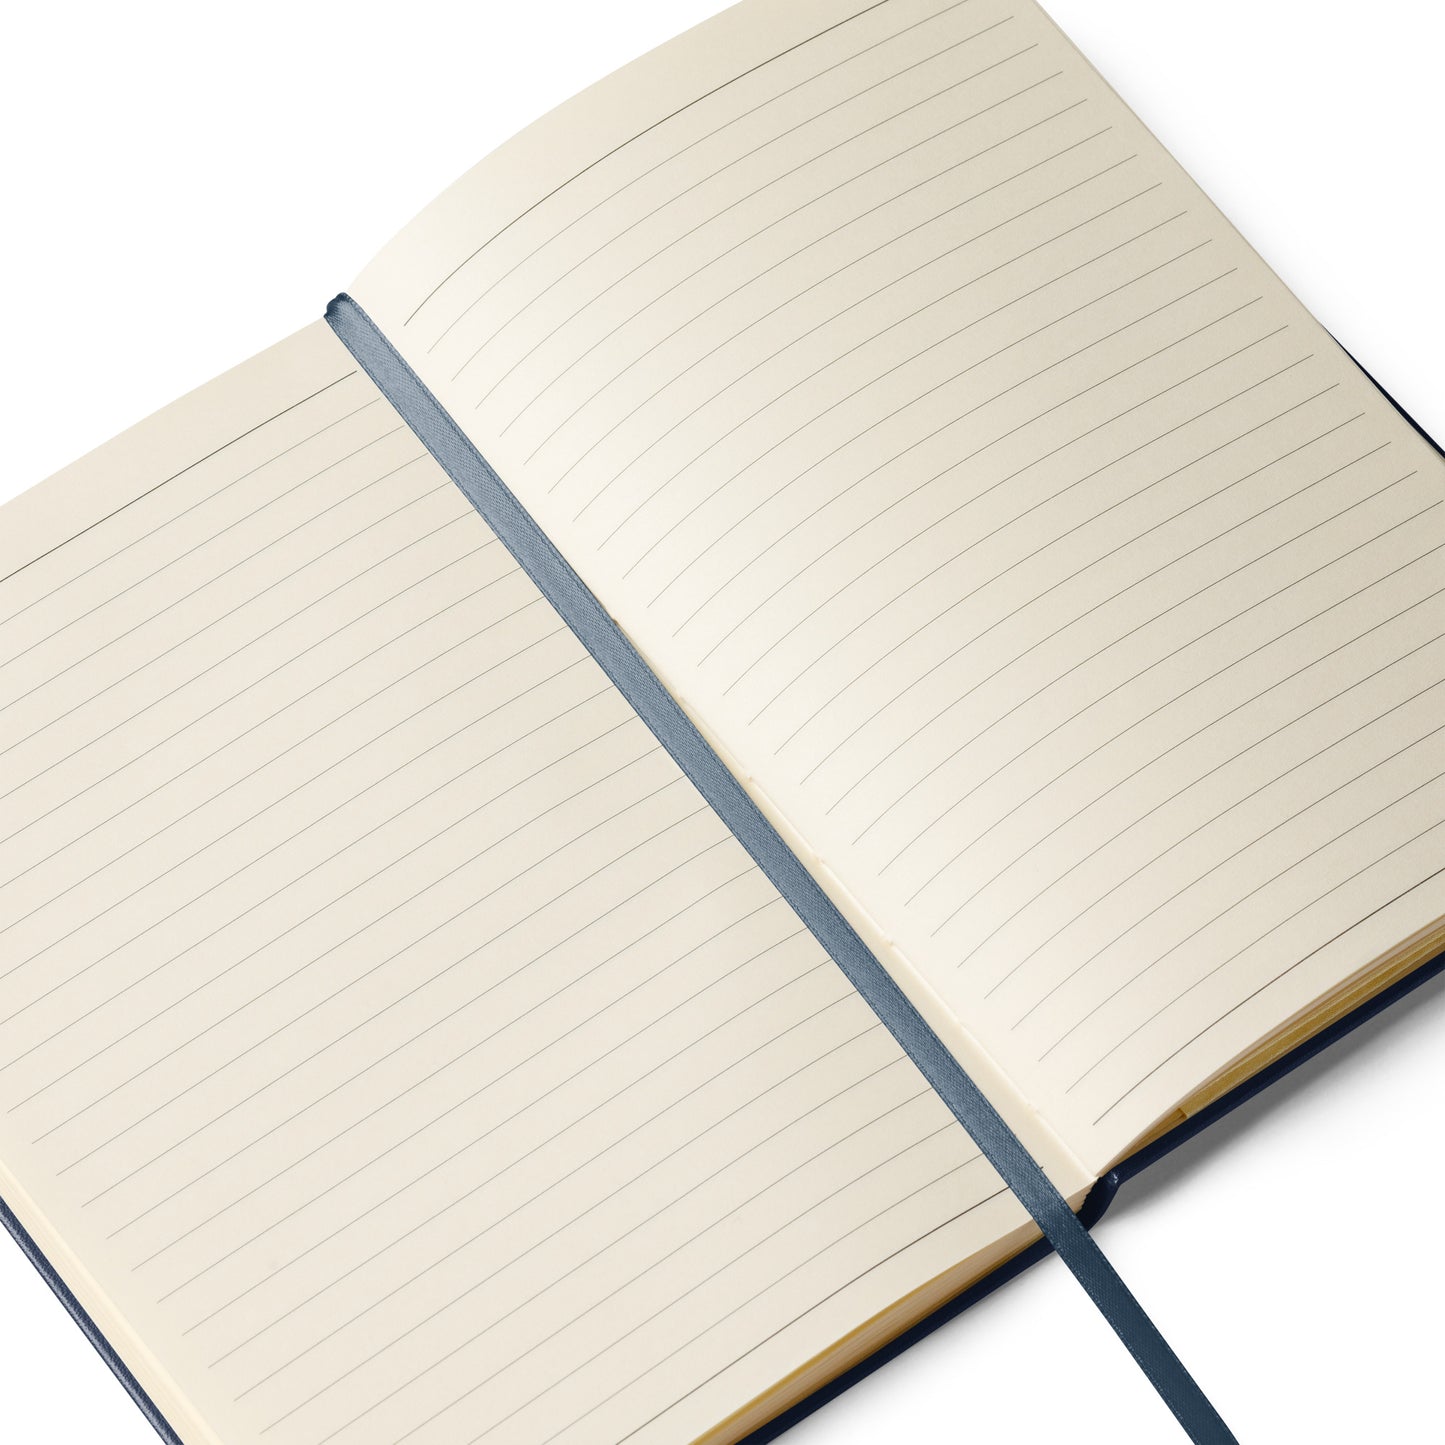 O1G - Hardcover Notebook